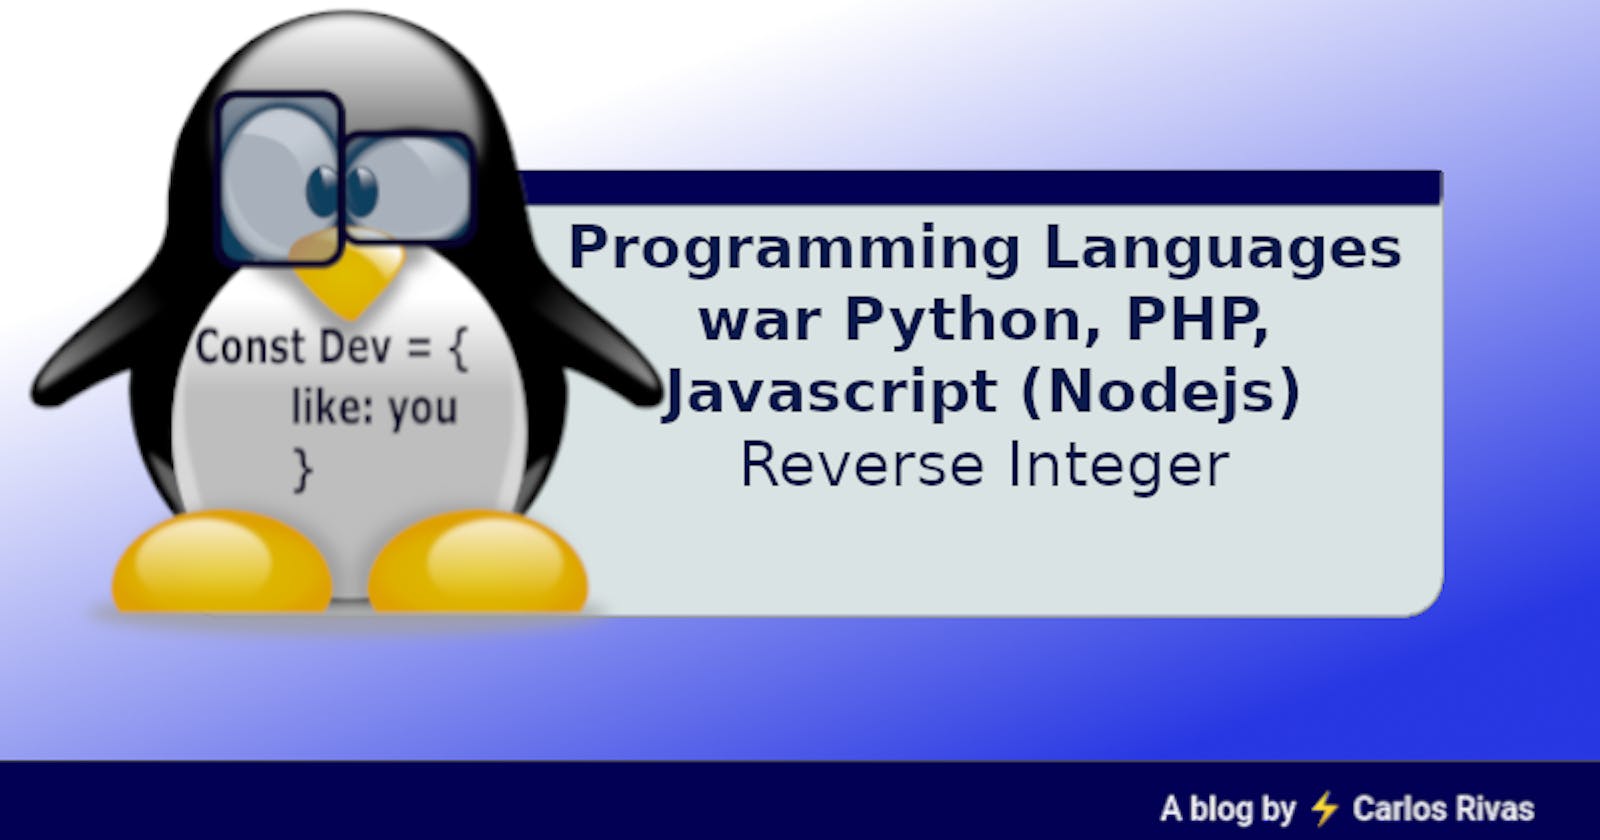 Programming Languages war
Python, PHP, Javascript (Nodejs)
Reverse Integer